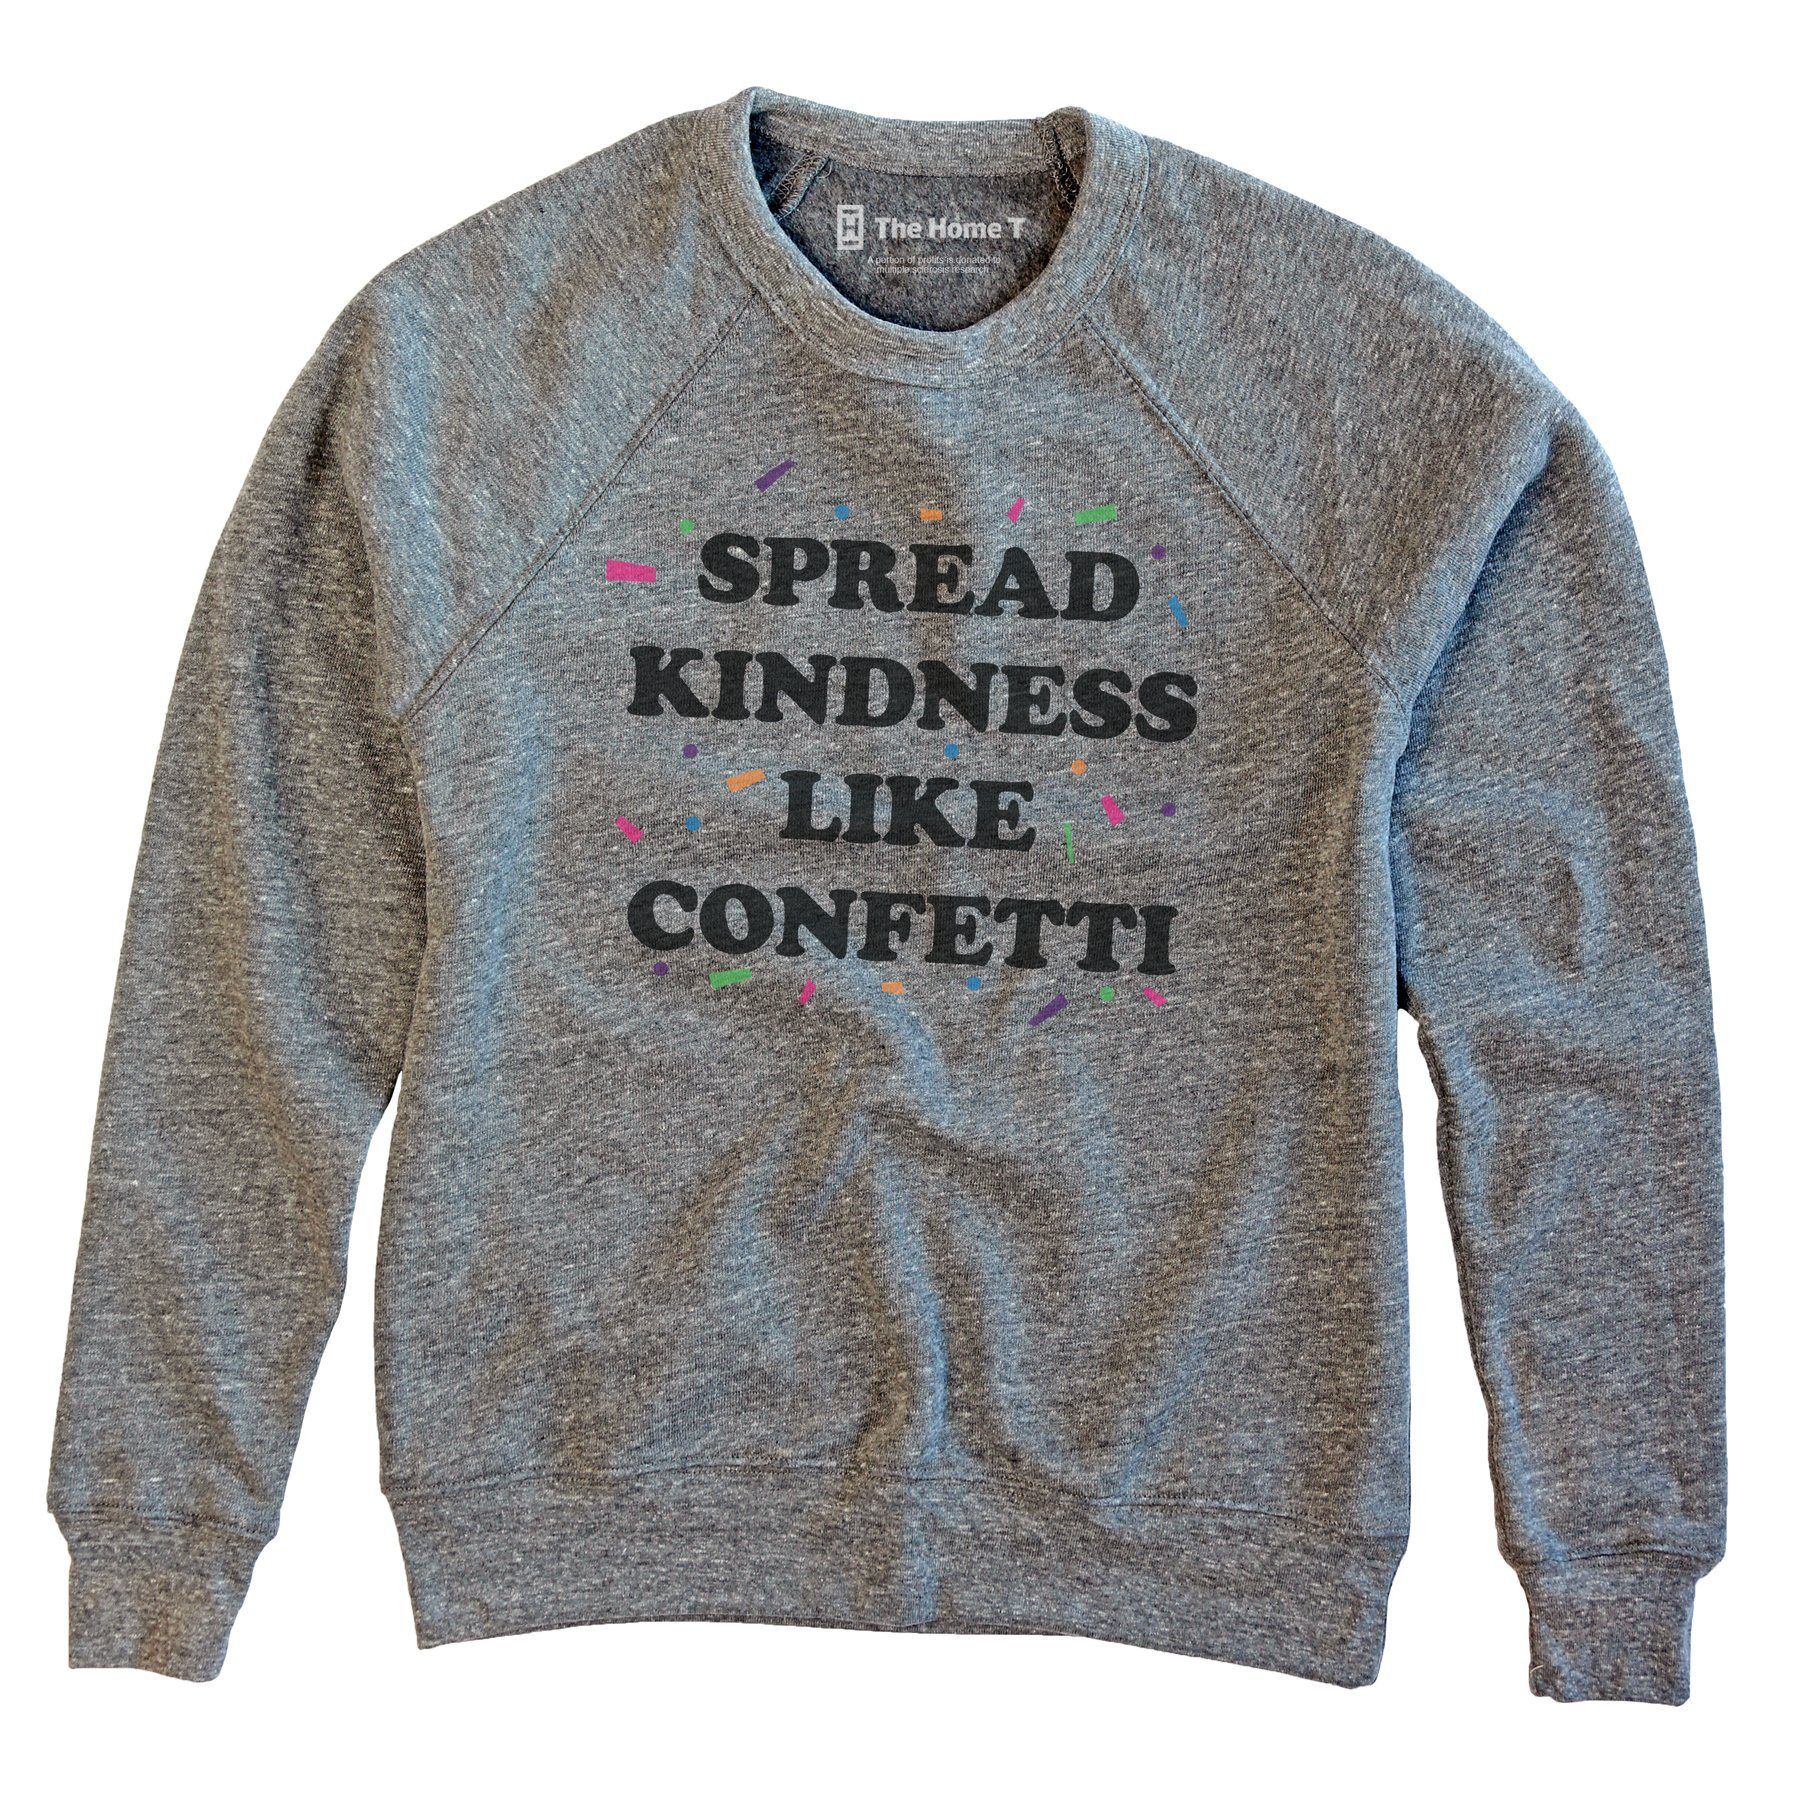 Spread Kindness Like Confetti Crew neck The Home T XS Sweatshirt